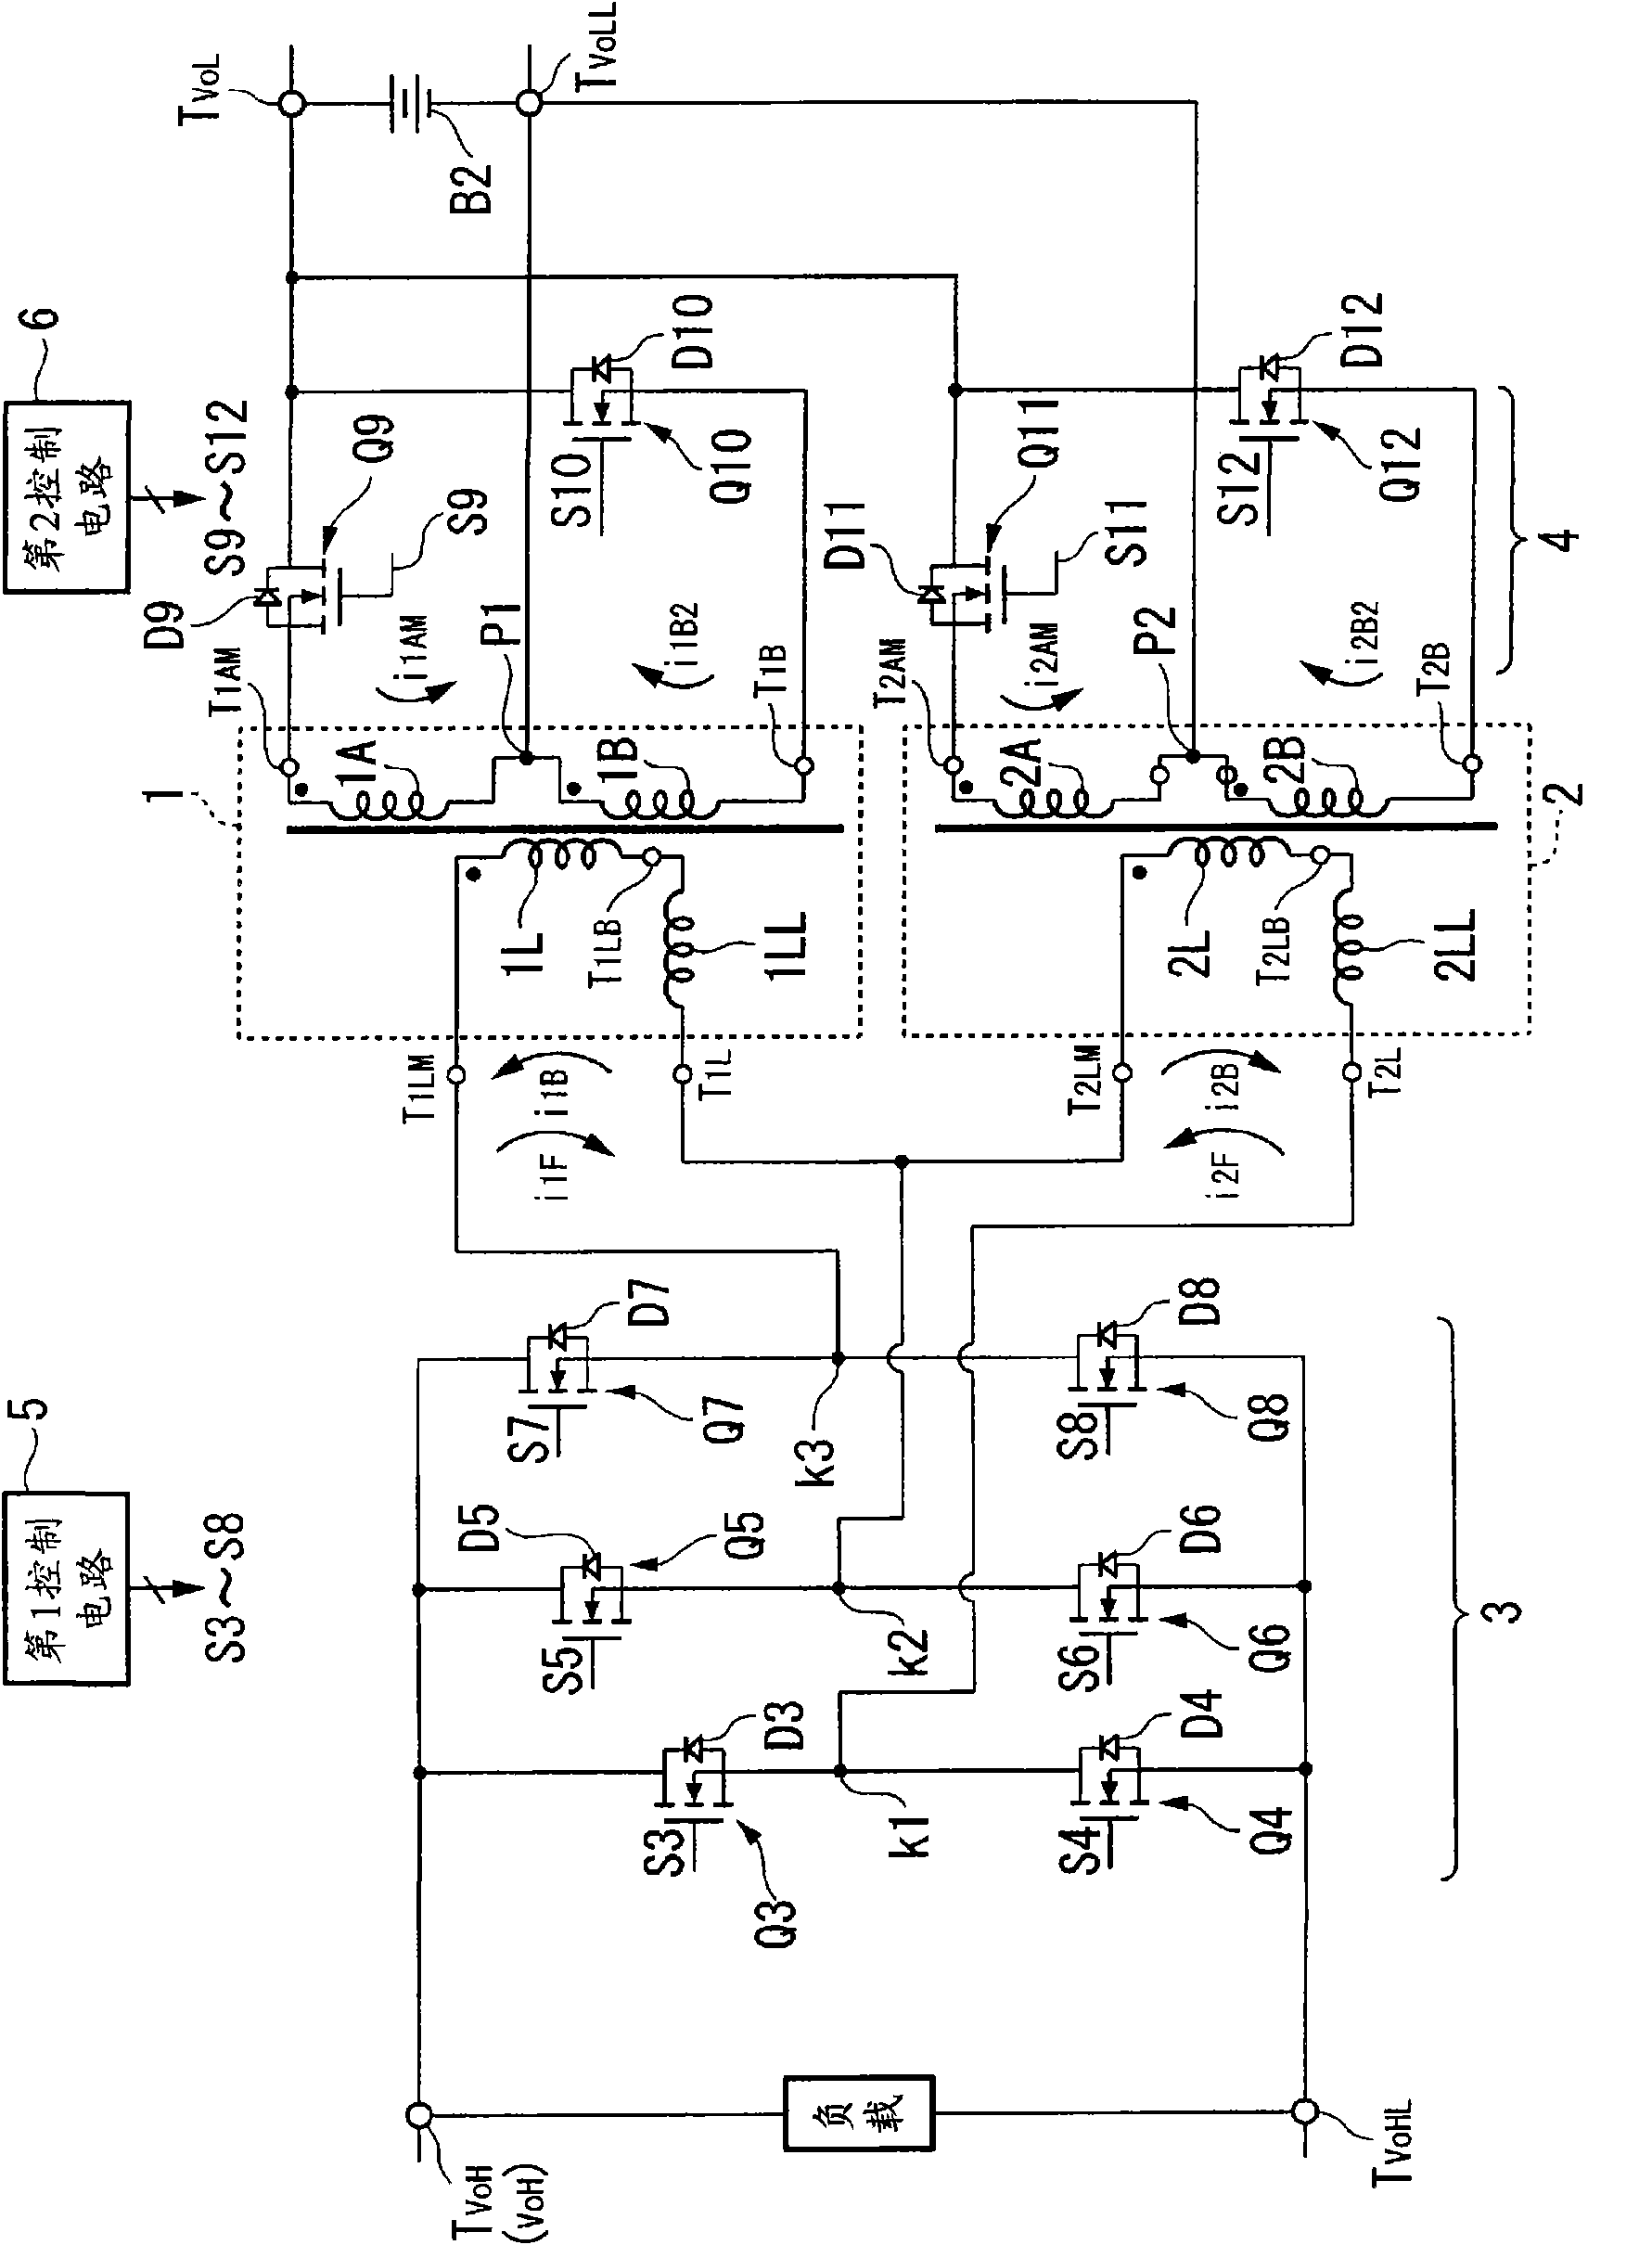 Bidirectional DC/DC converter